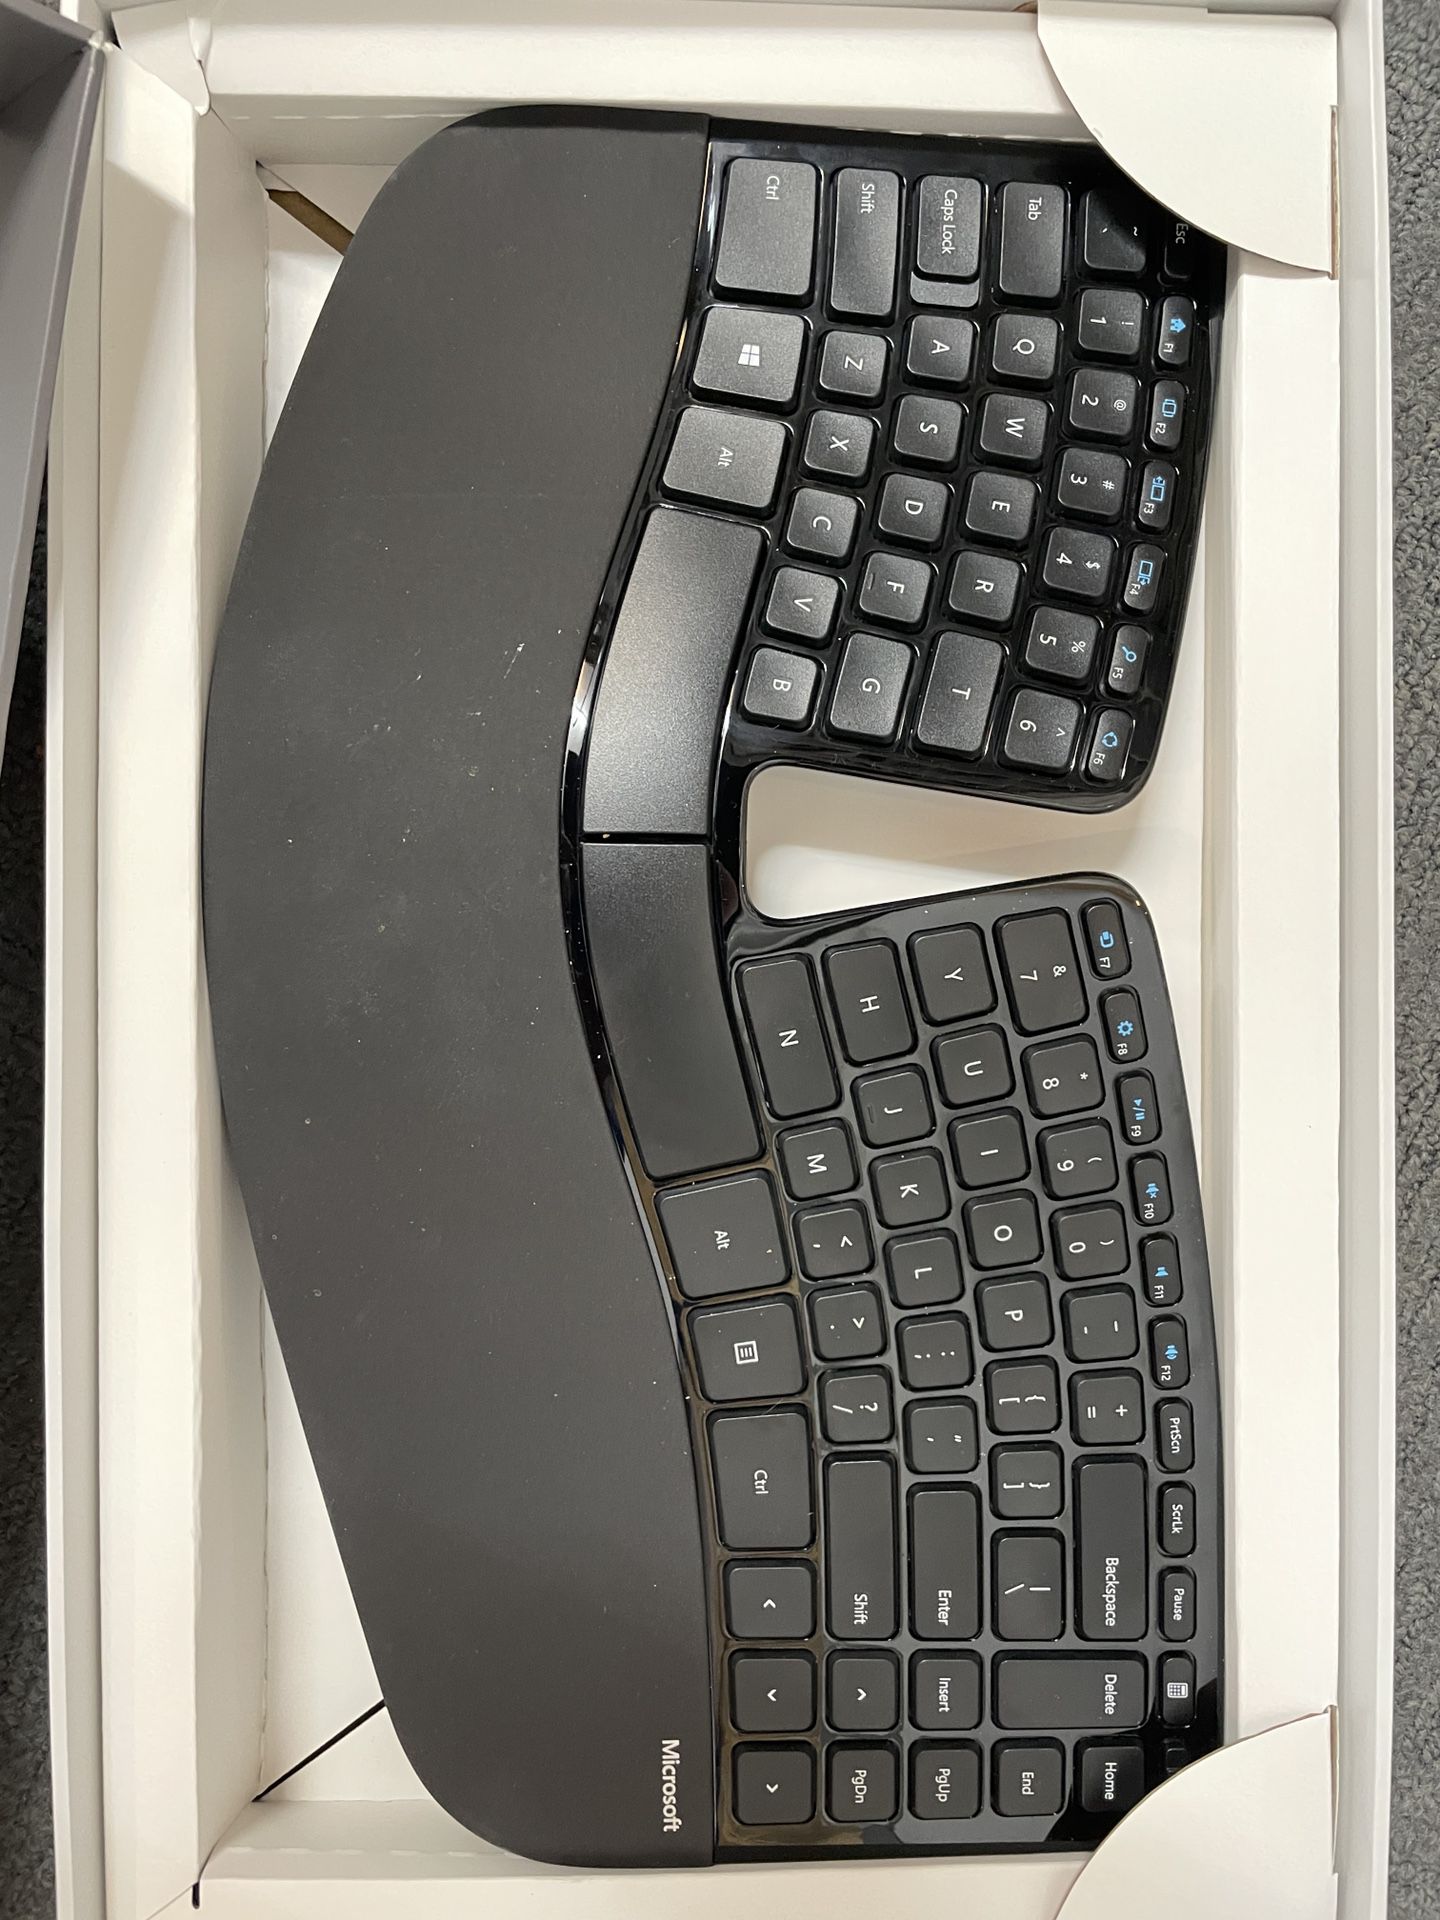 Microsoft Sculpt Ergonomic Desktop Keyboard, Mouse And Numpad